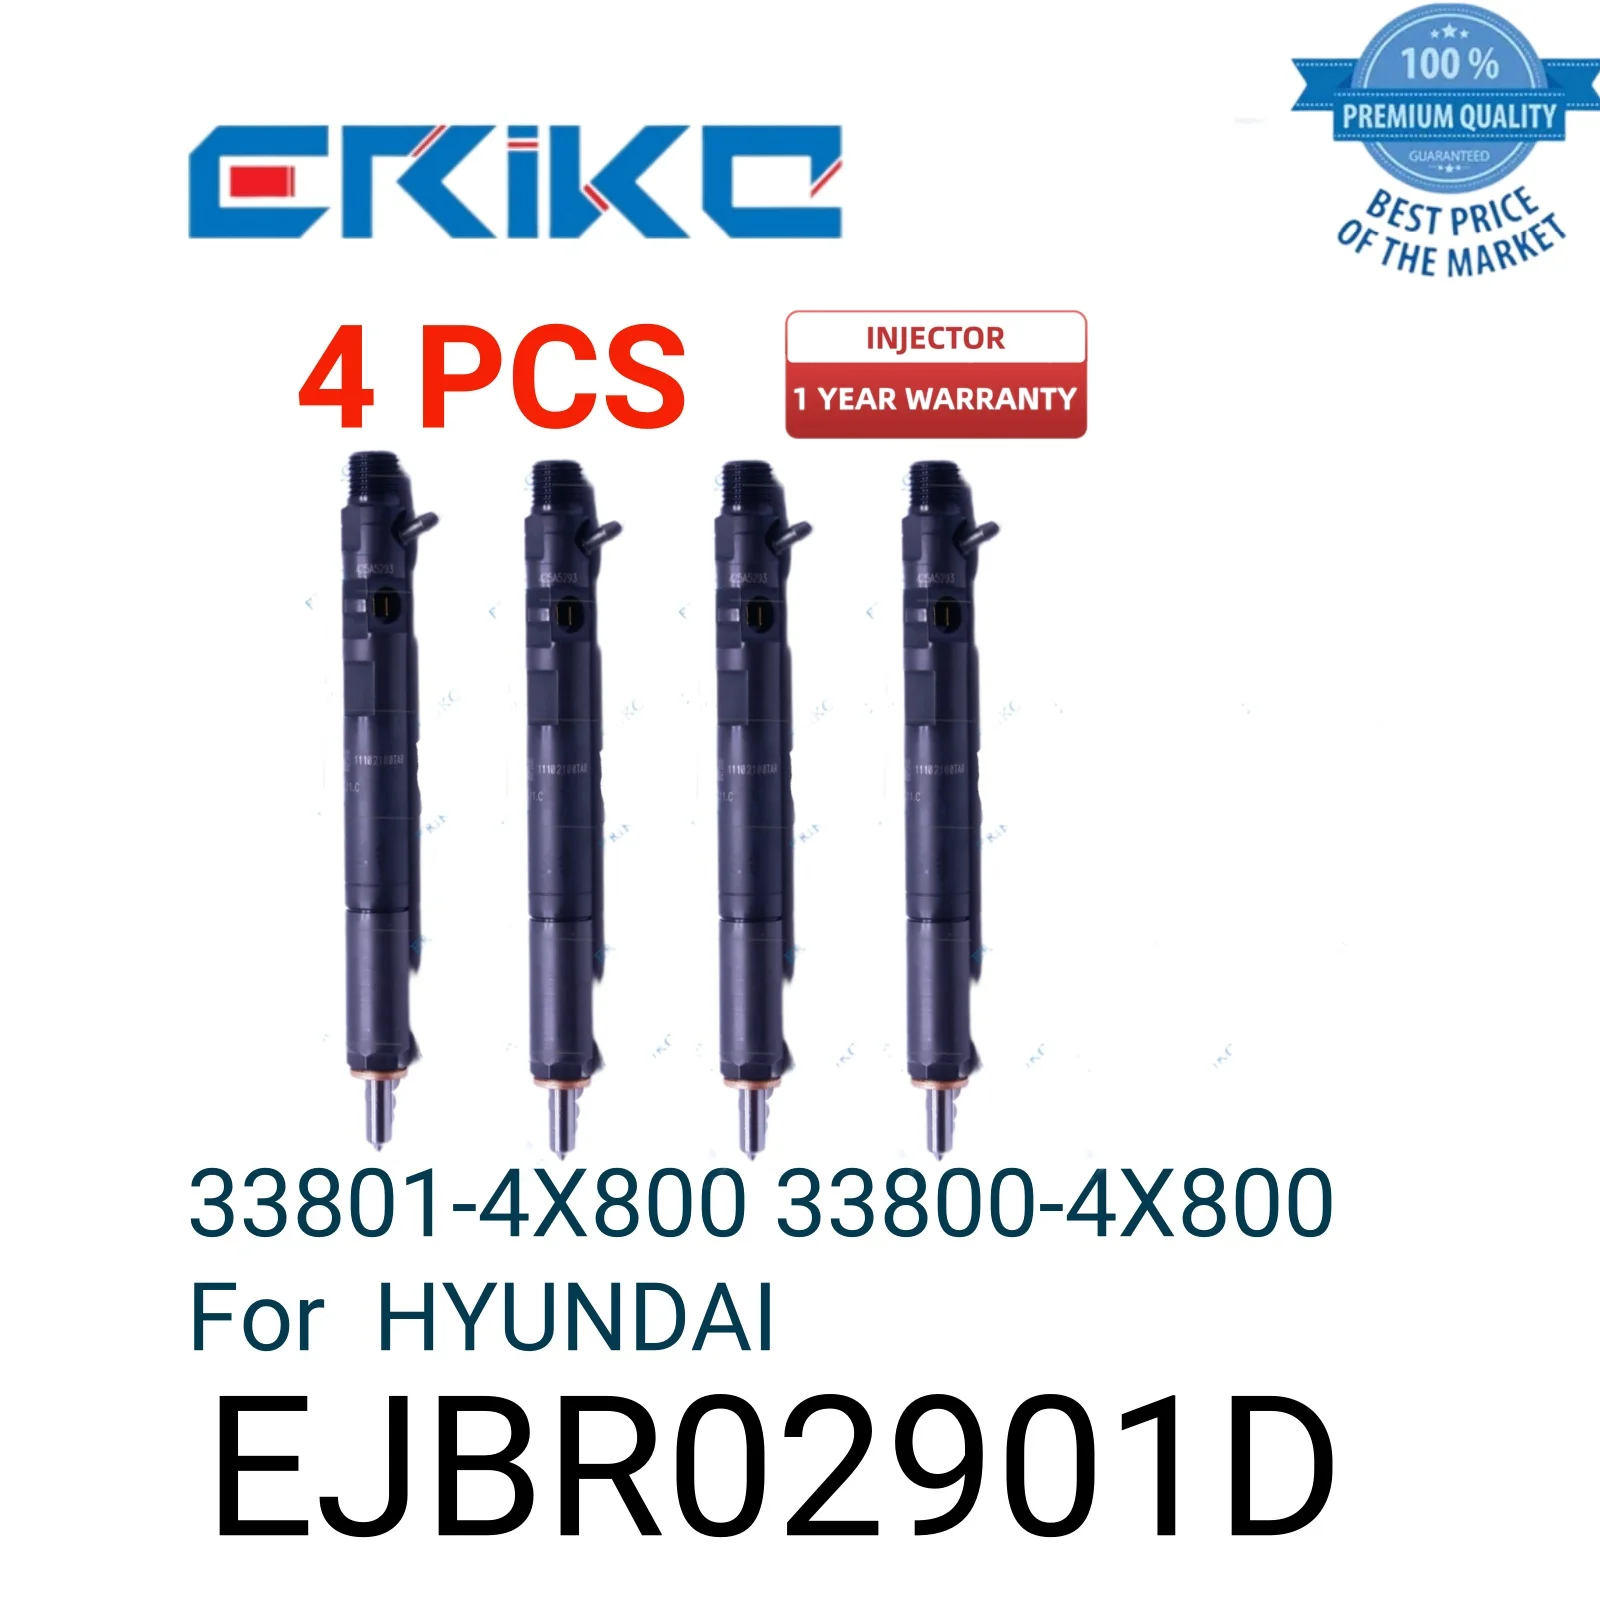 

4 PCS EJBR02901D Complete Injector EJBR 029 01D Diesel Fuel Injector EJBR 029 01D 33801-4X800 33800-4X800 fit for HYUNDAI